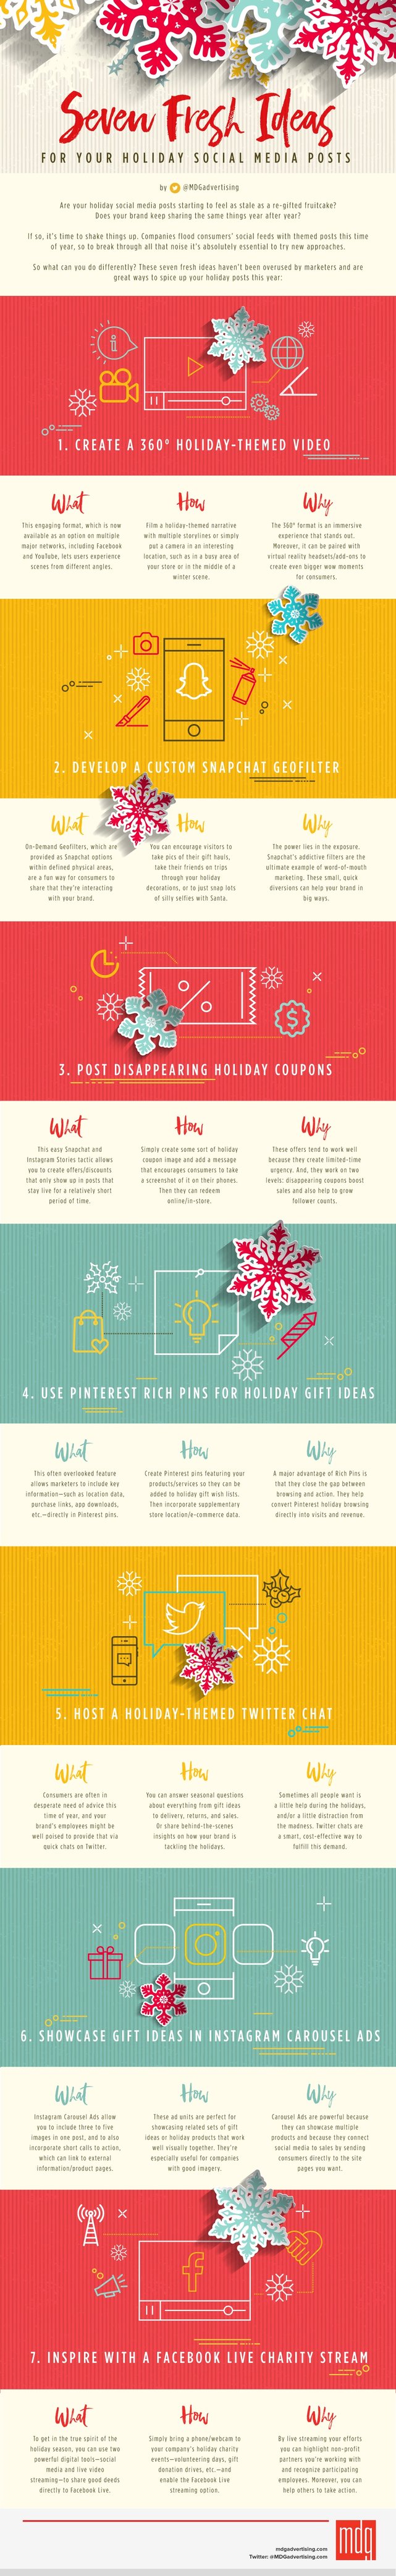 holiday social media posts - infographic.jpg